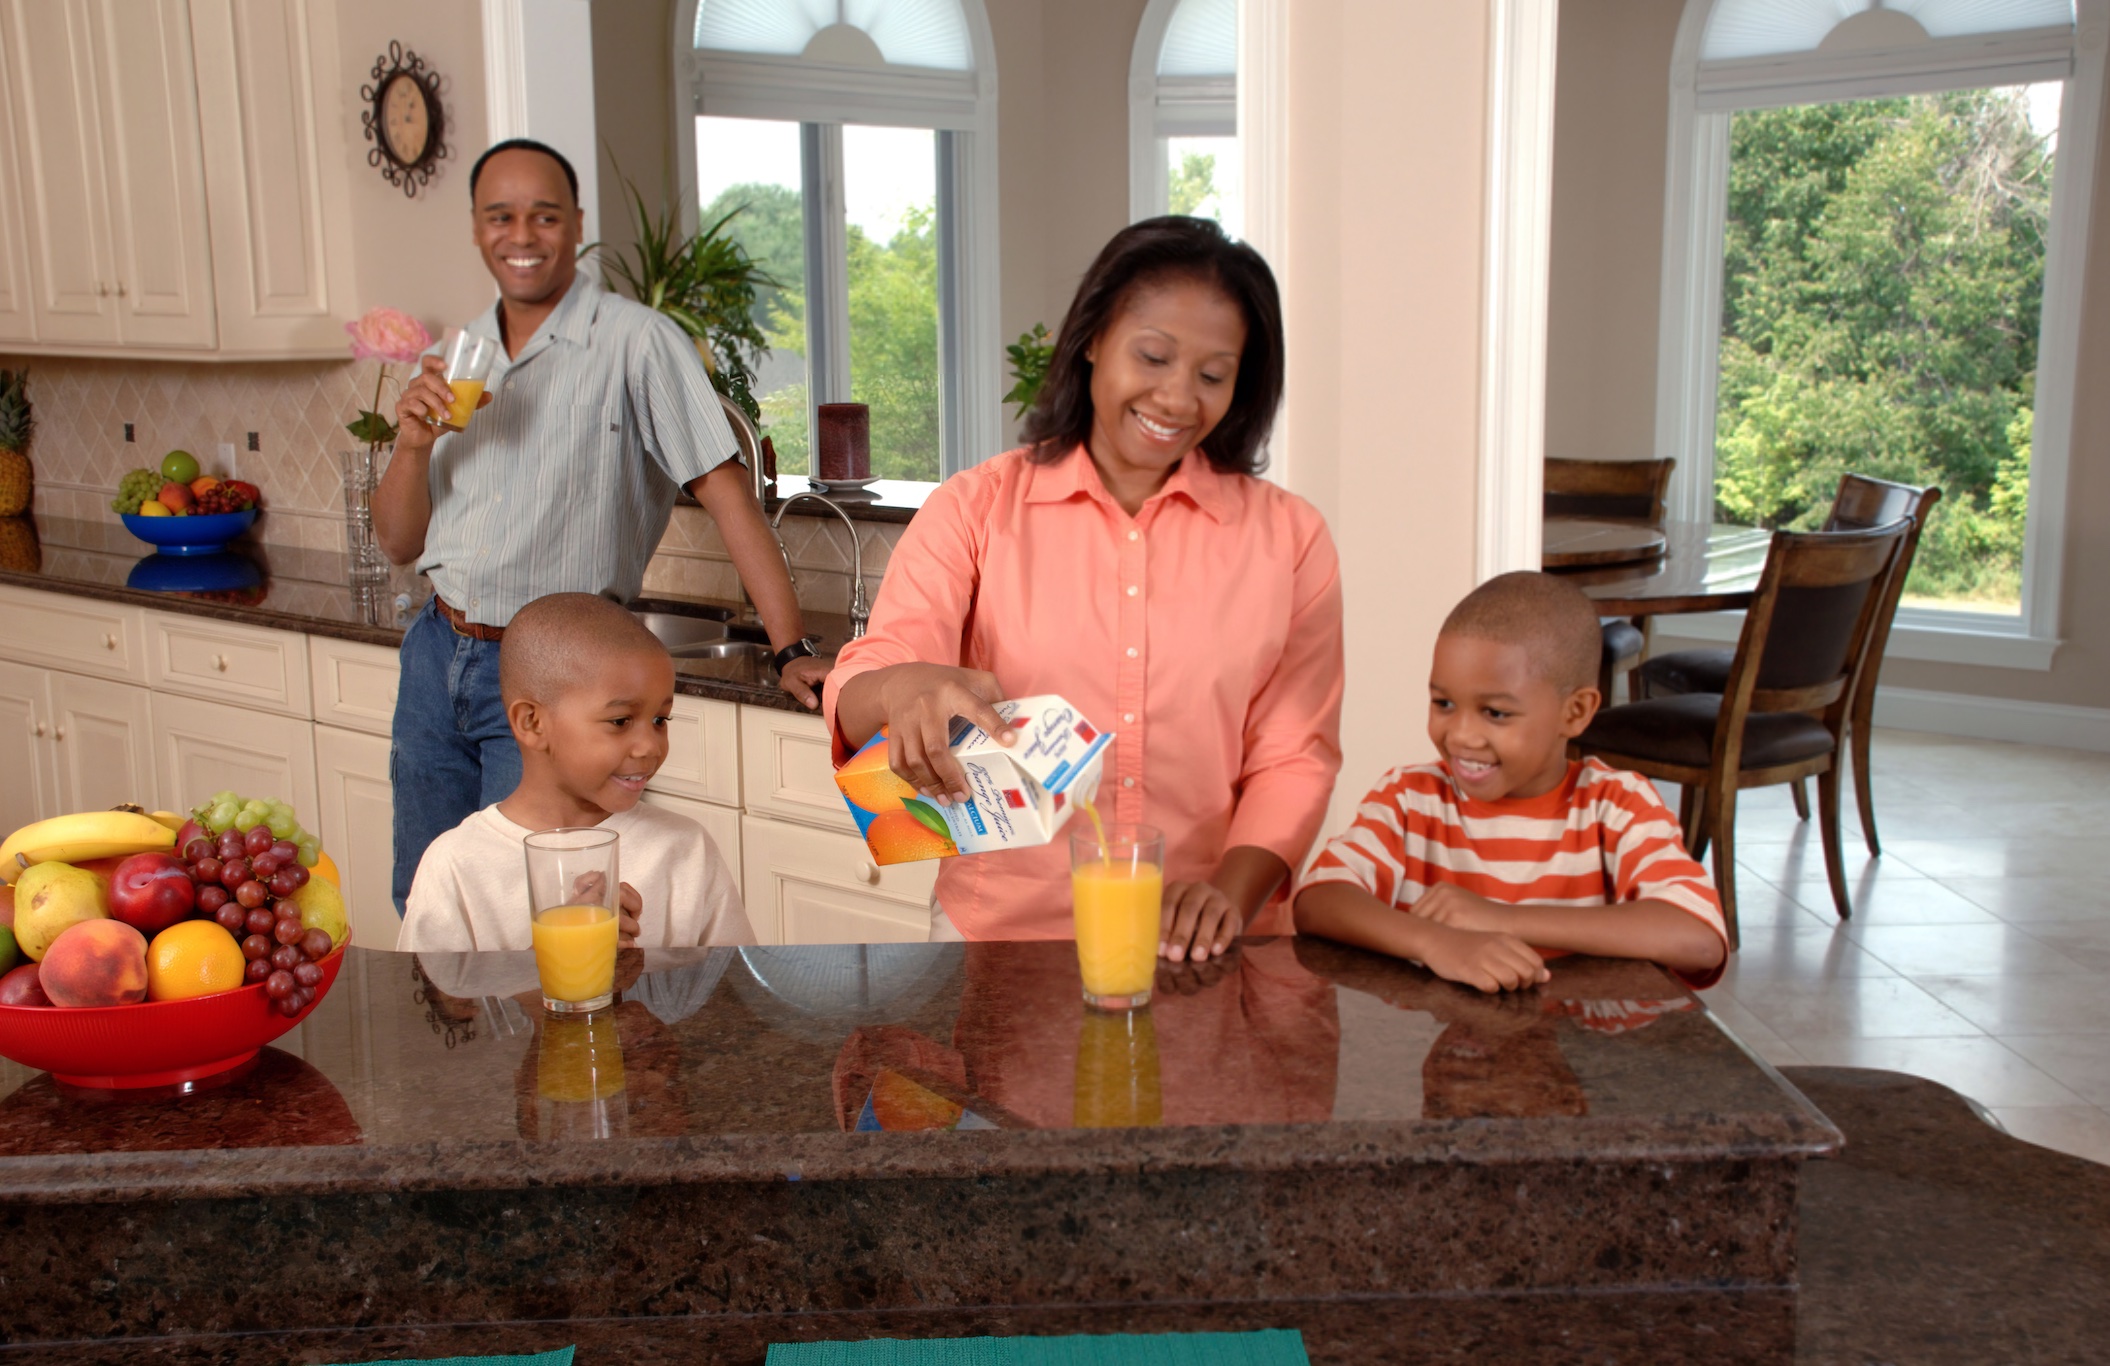 Black family in kitchen drinking orange juice; image by National Cancer Institute, via Unsplash.com.